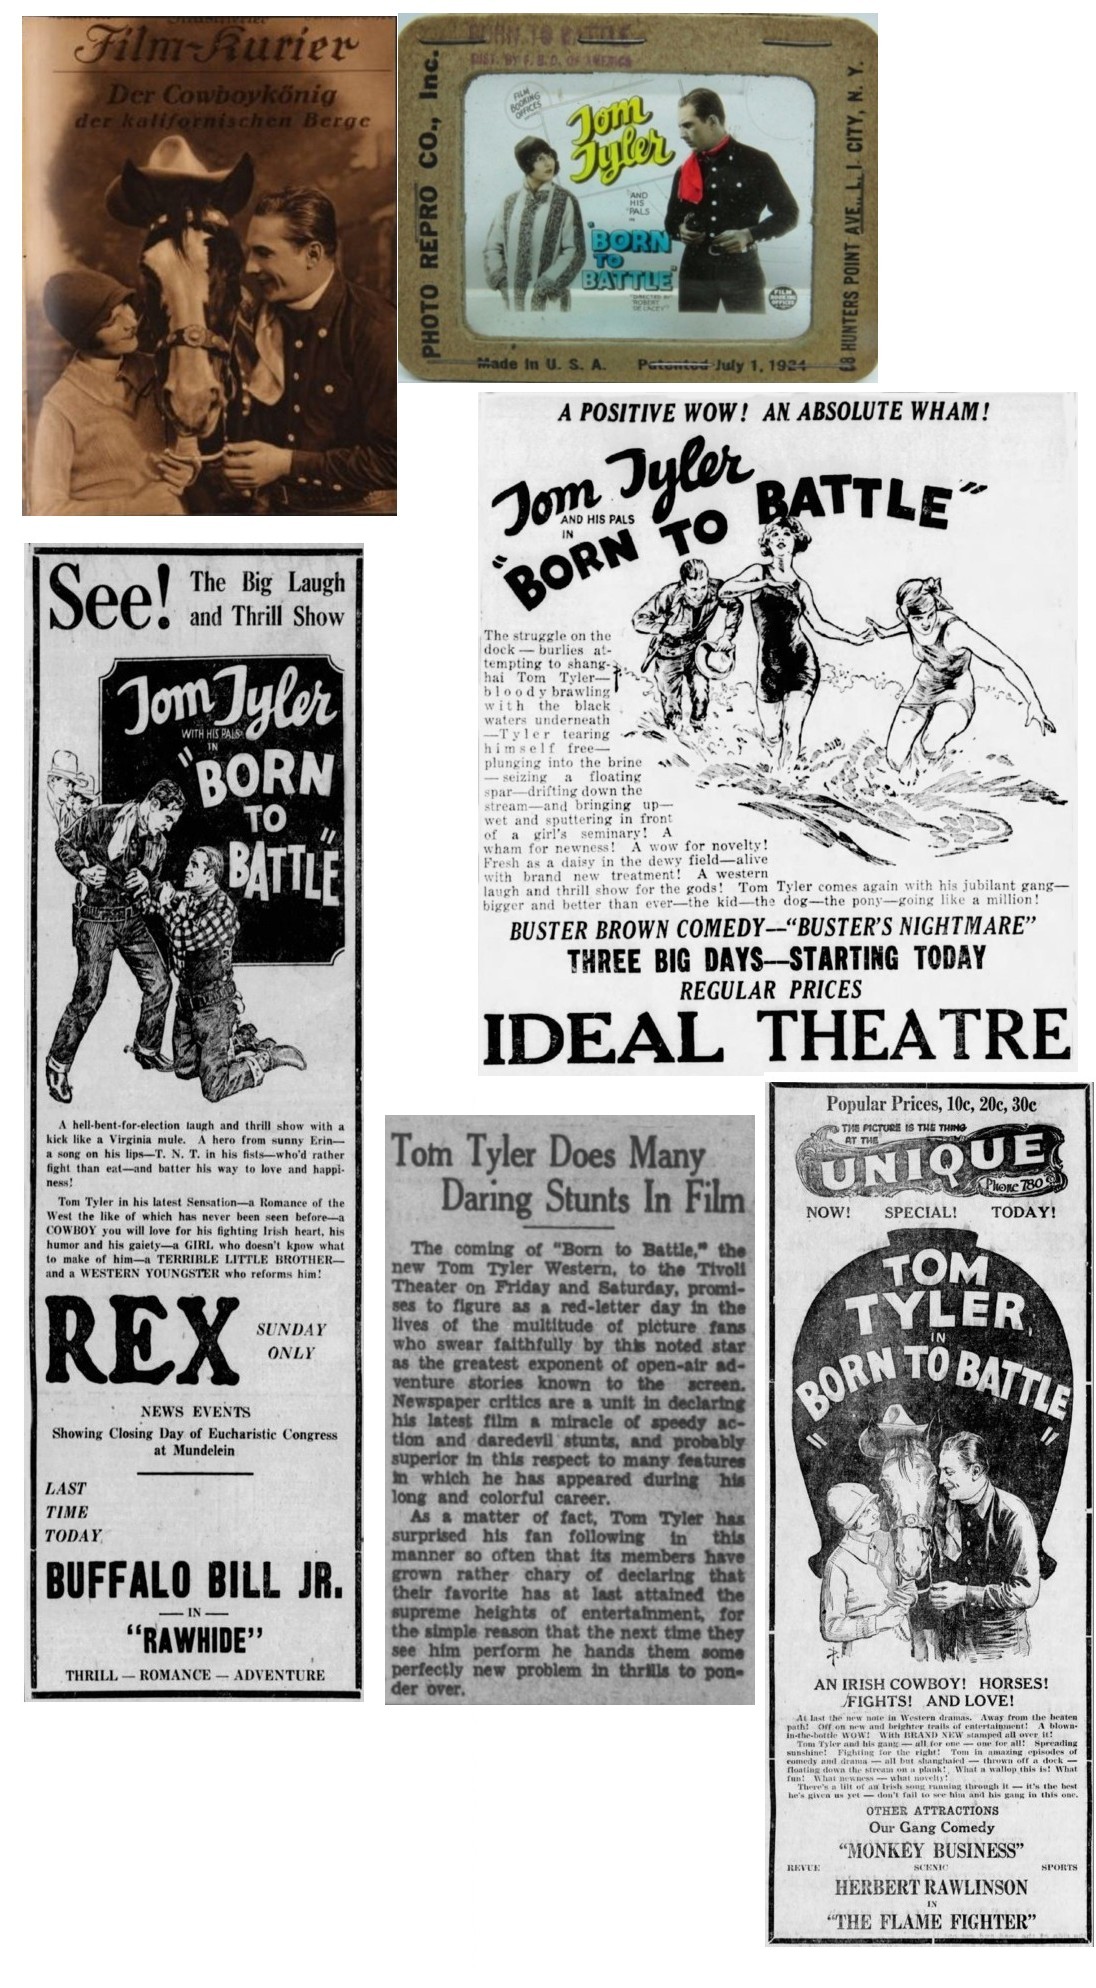 Born to Battle 1926 German film booklet lantern slide and cinema ads